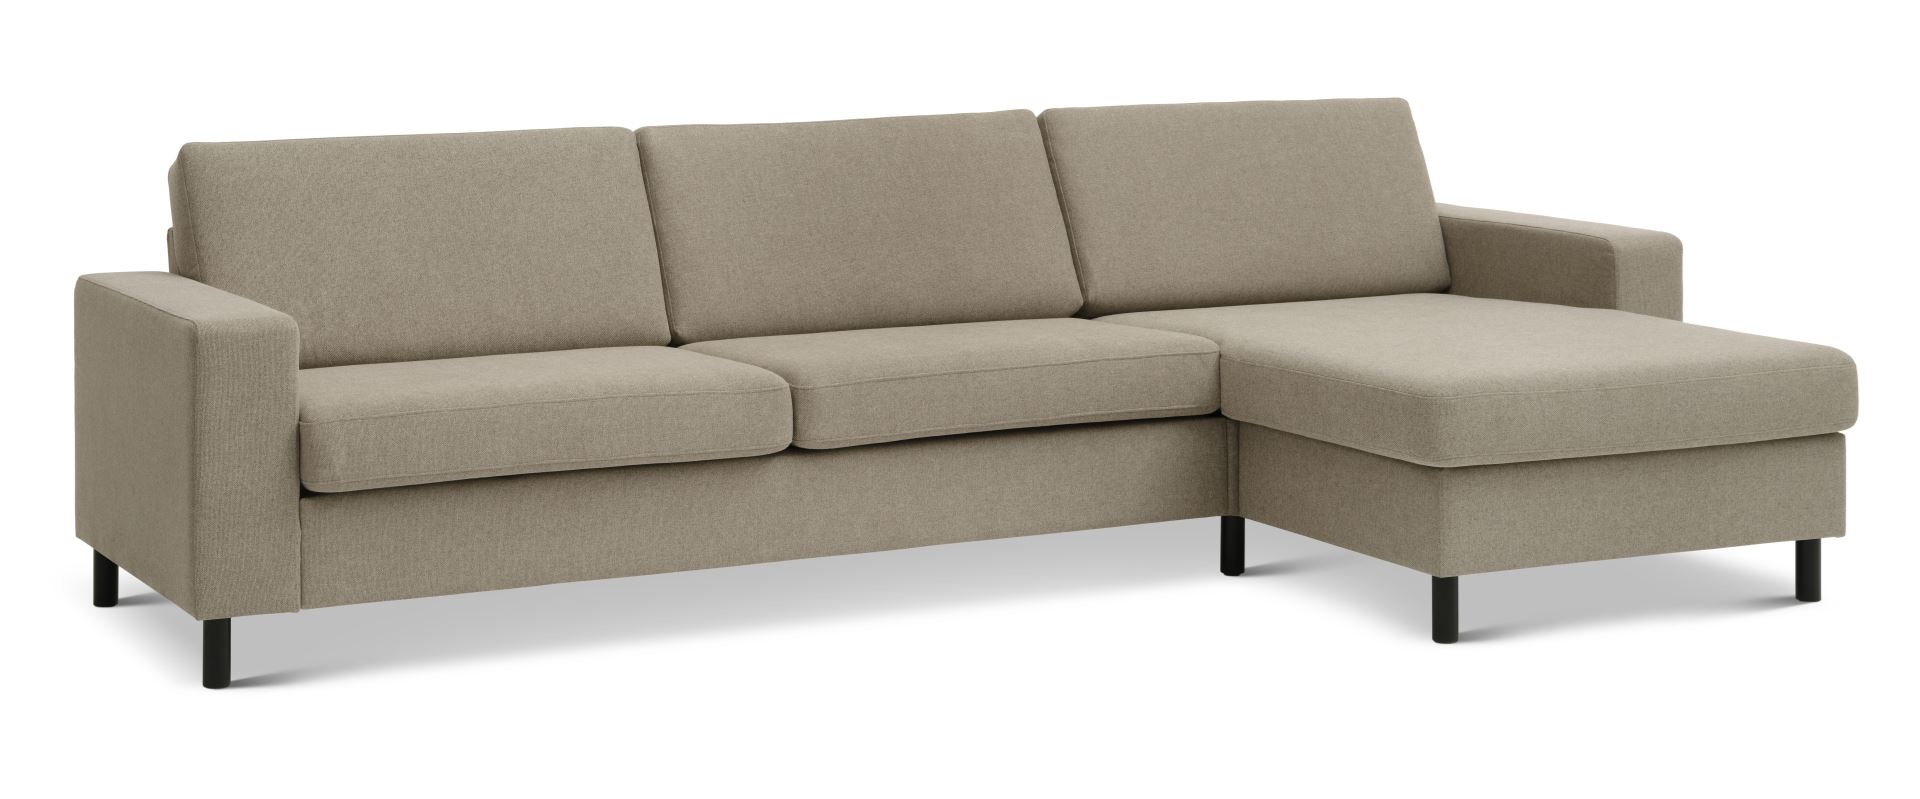 Pan set 8 3D XL sofa, m. chaiselong - antelope beige polyester stof og sort træ